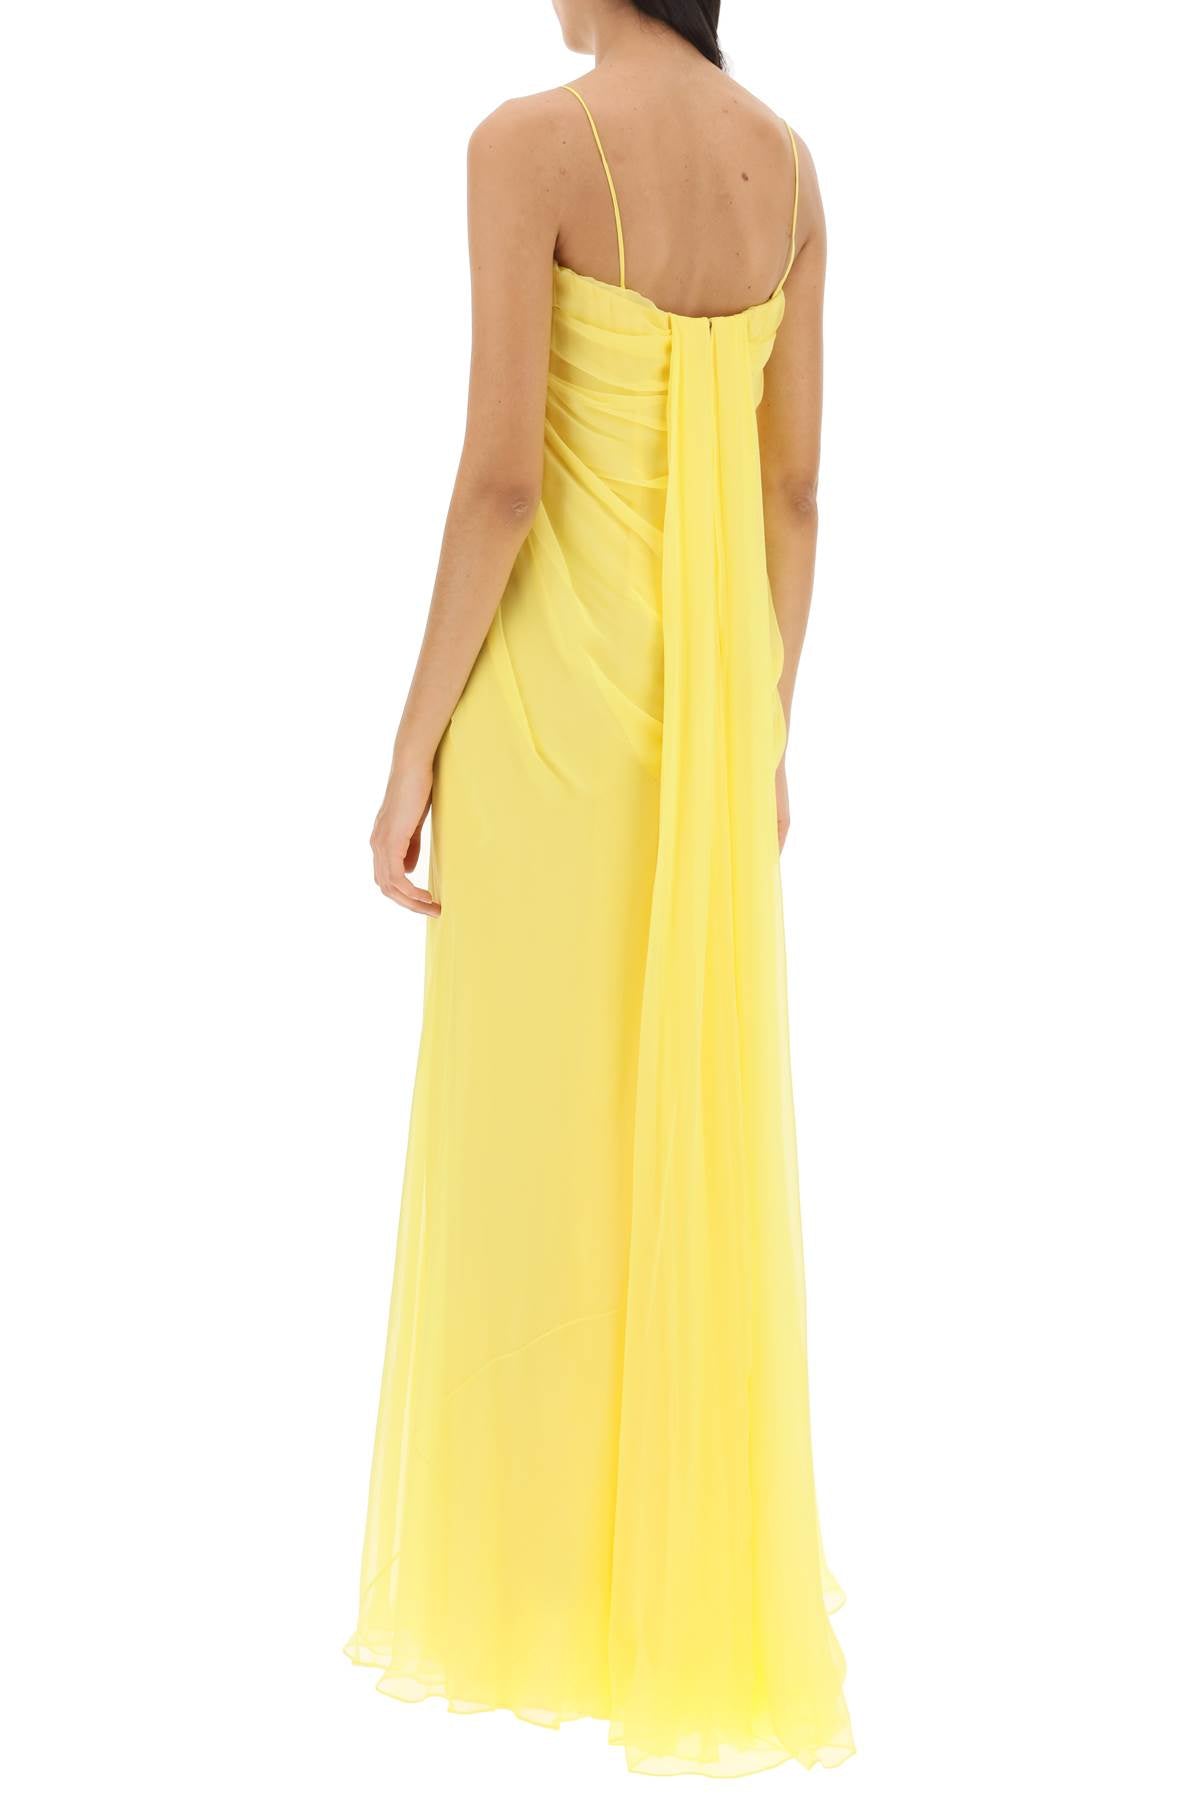 ALEXANDER MCQUEEN Yellow Silk Chiffon Bustier Gown in Column Silhouette for Women